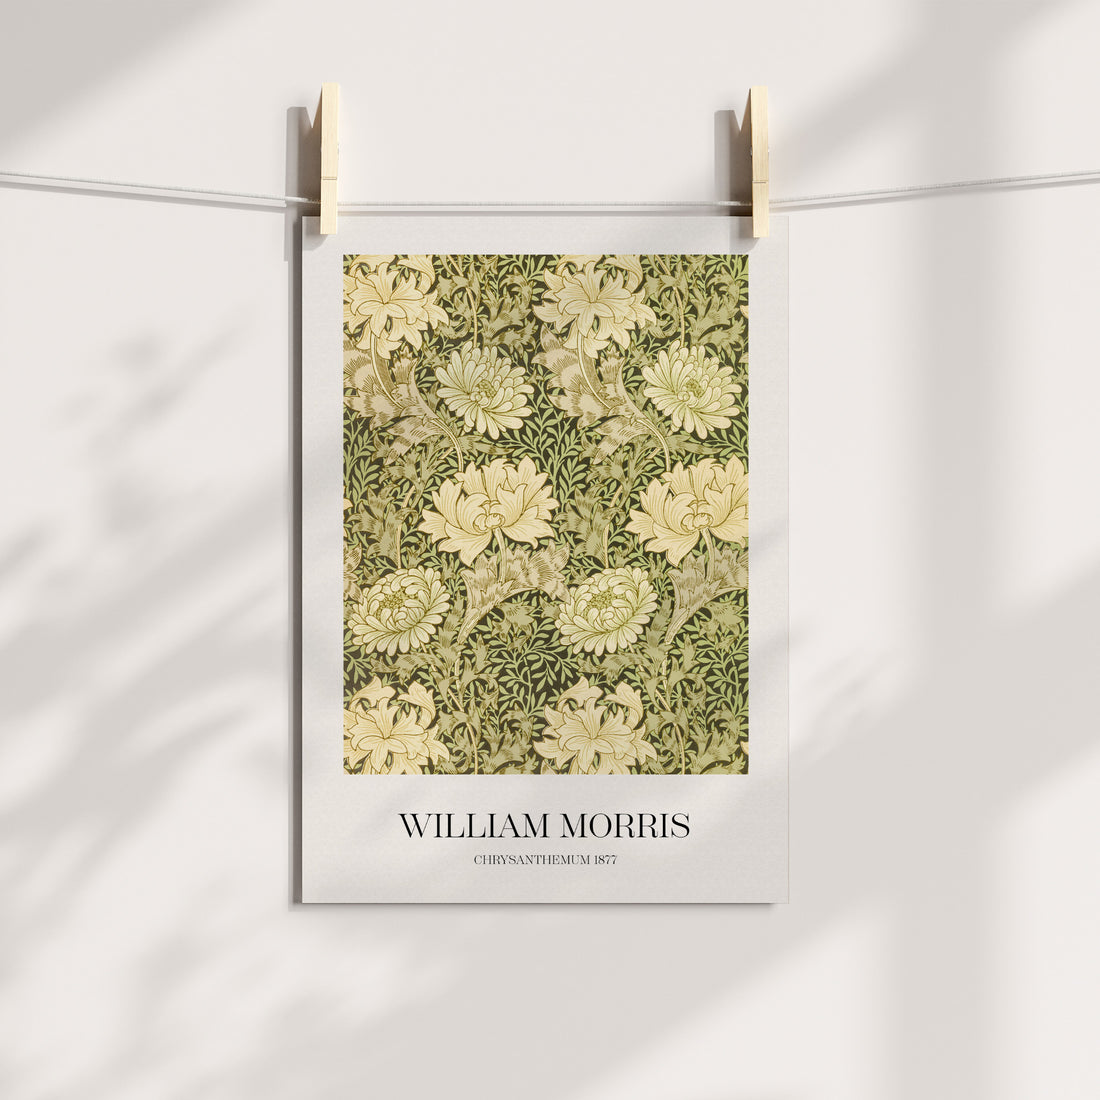 Chrysanthemum William Morris Gallery Printable Art